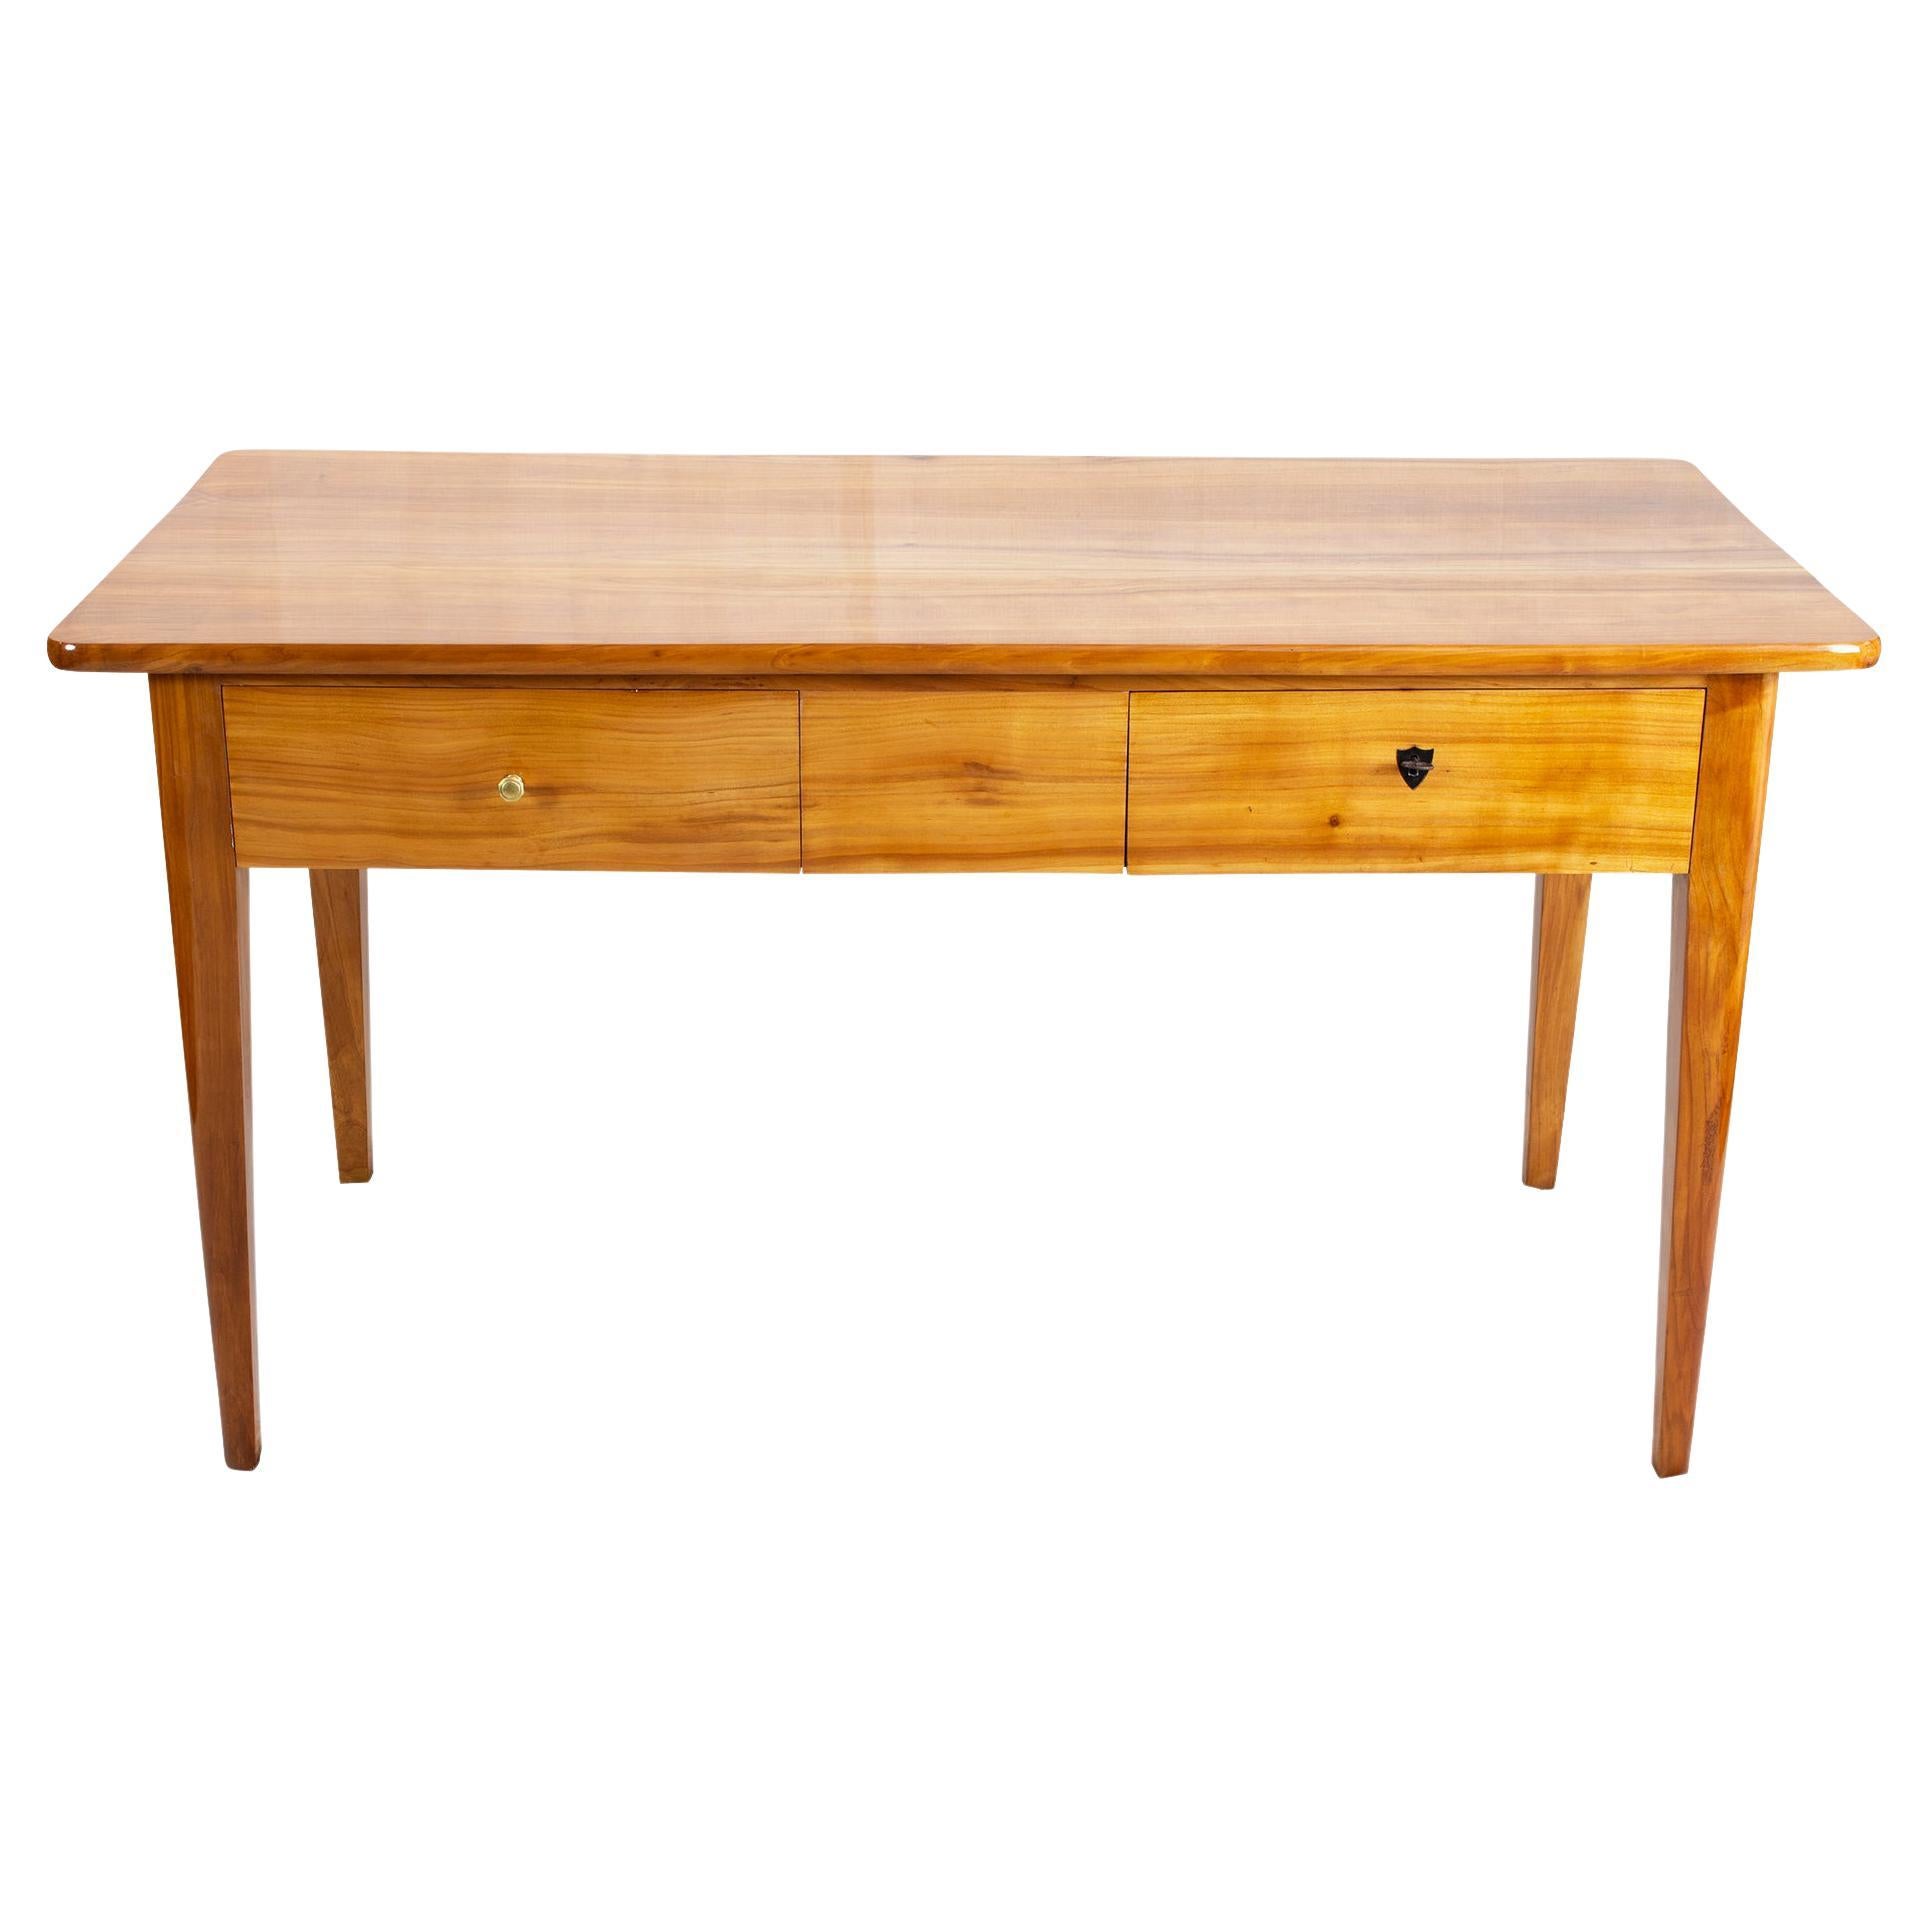 19th Century Biedermeier Solid Cherrywood Table